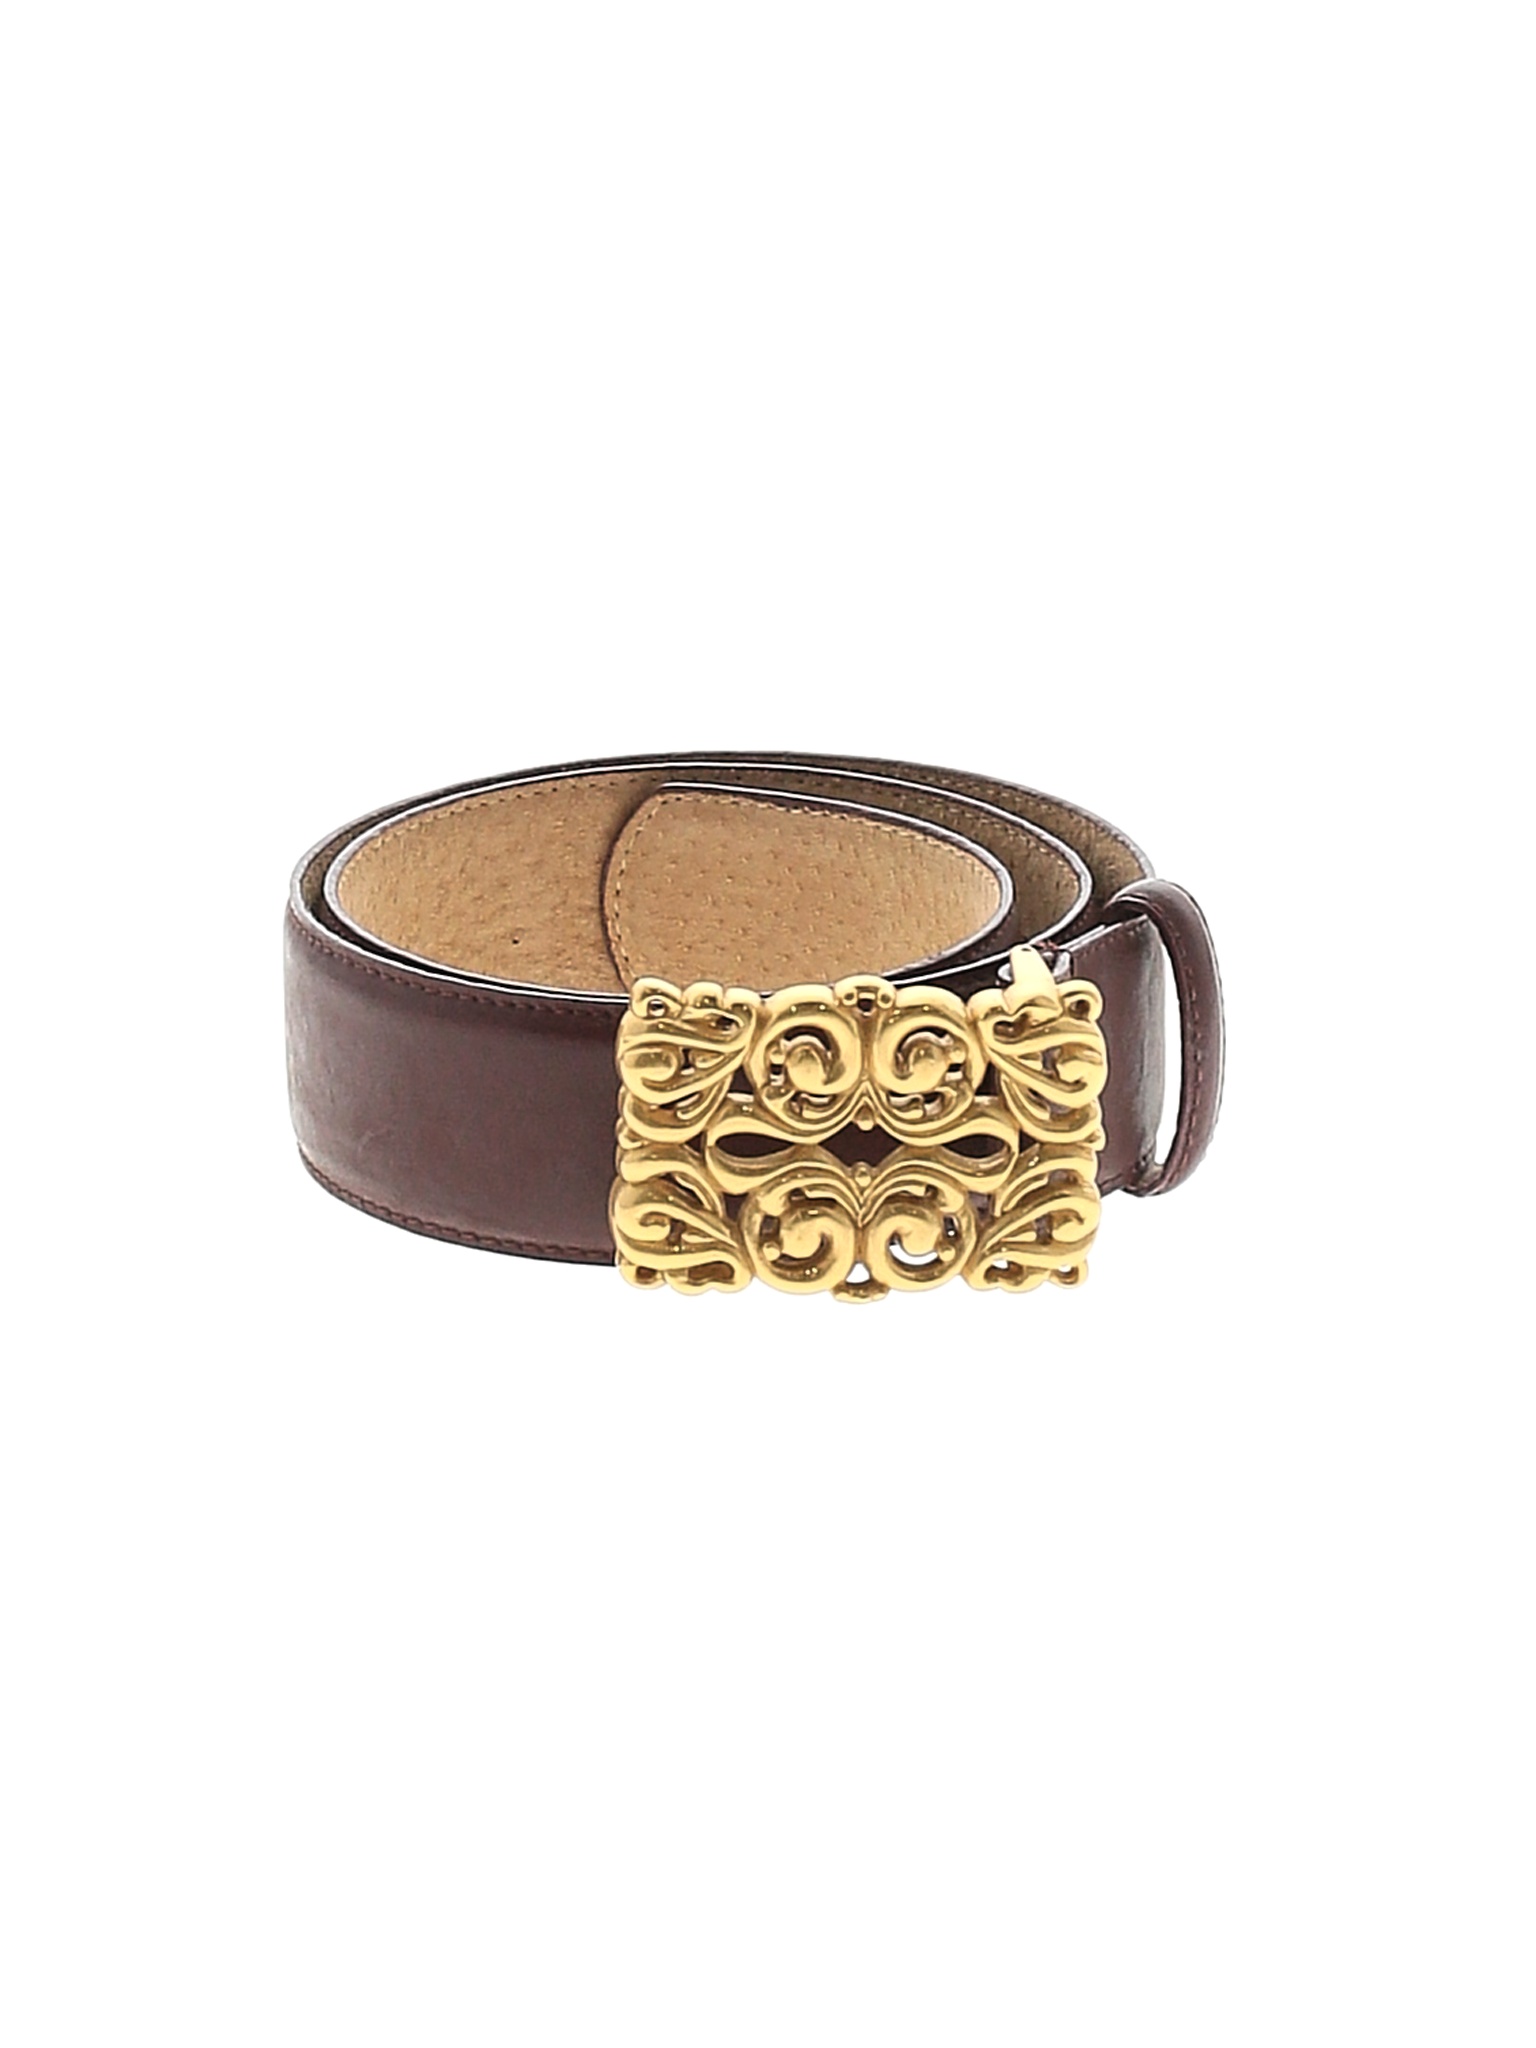 vintage claiborne brown leather belt size 44